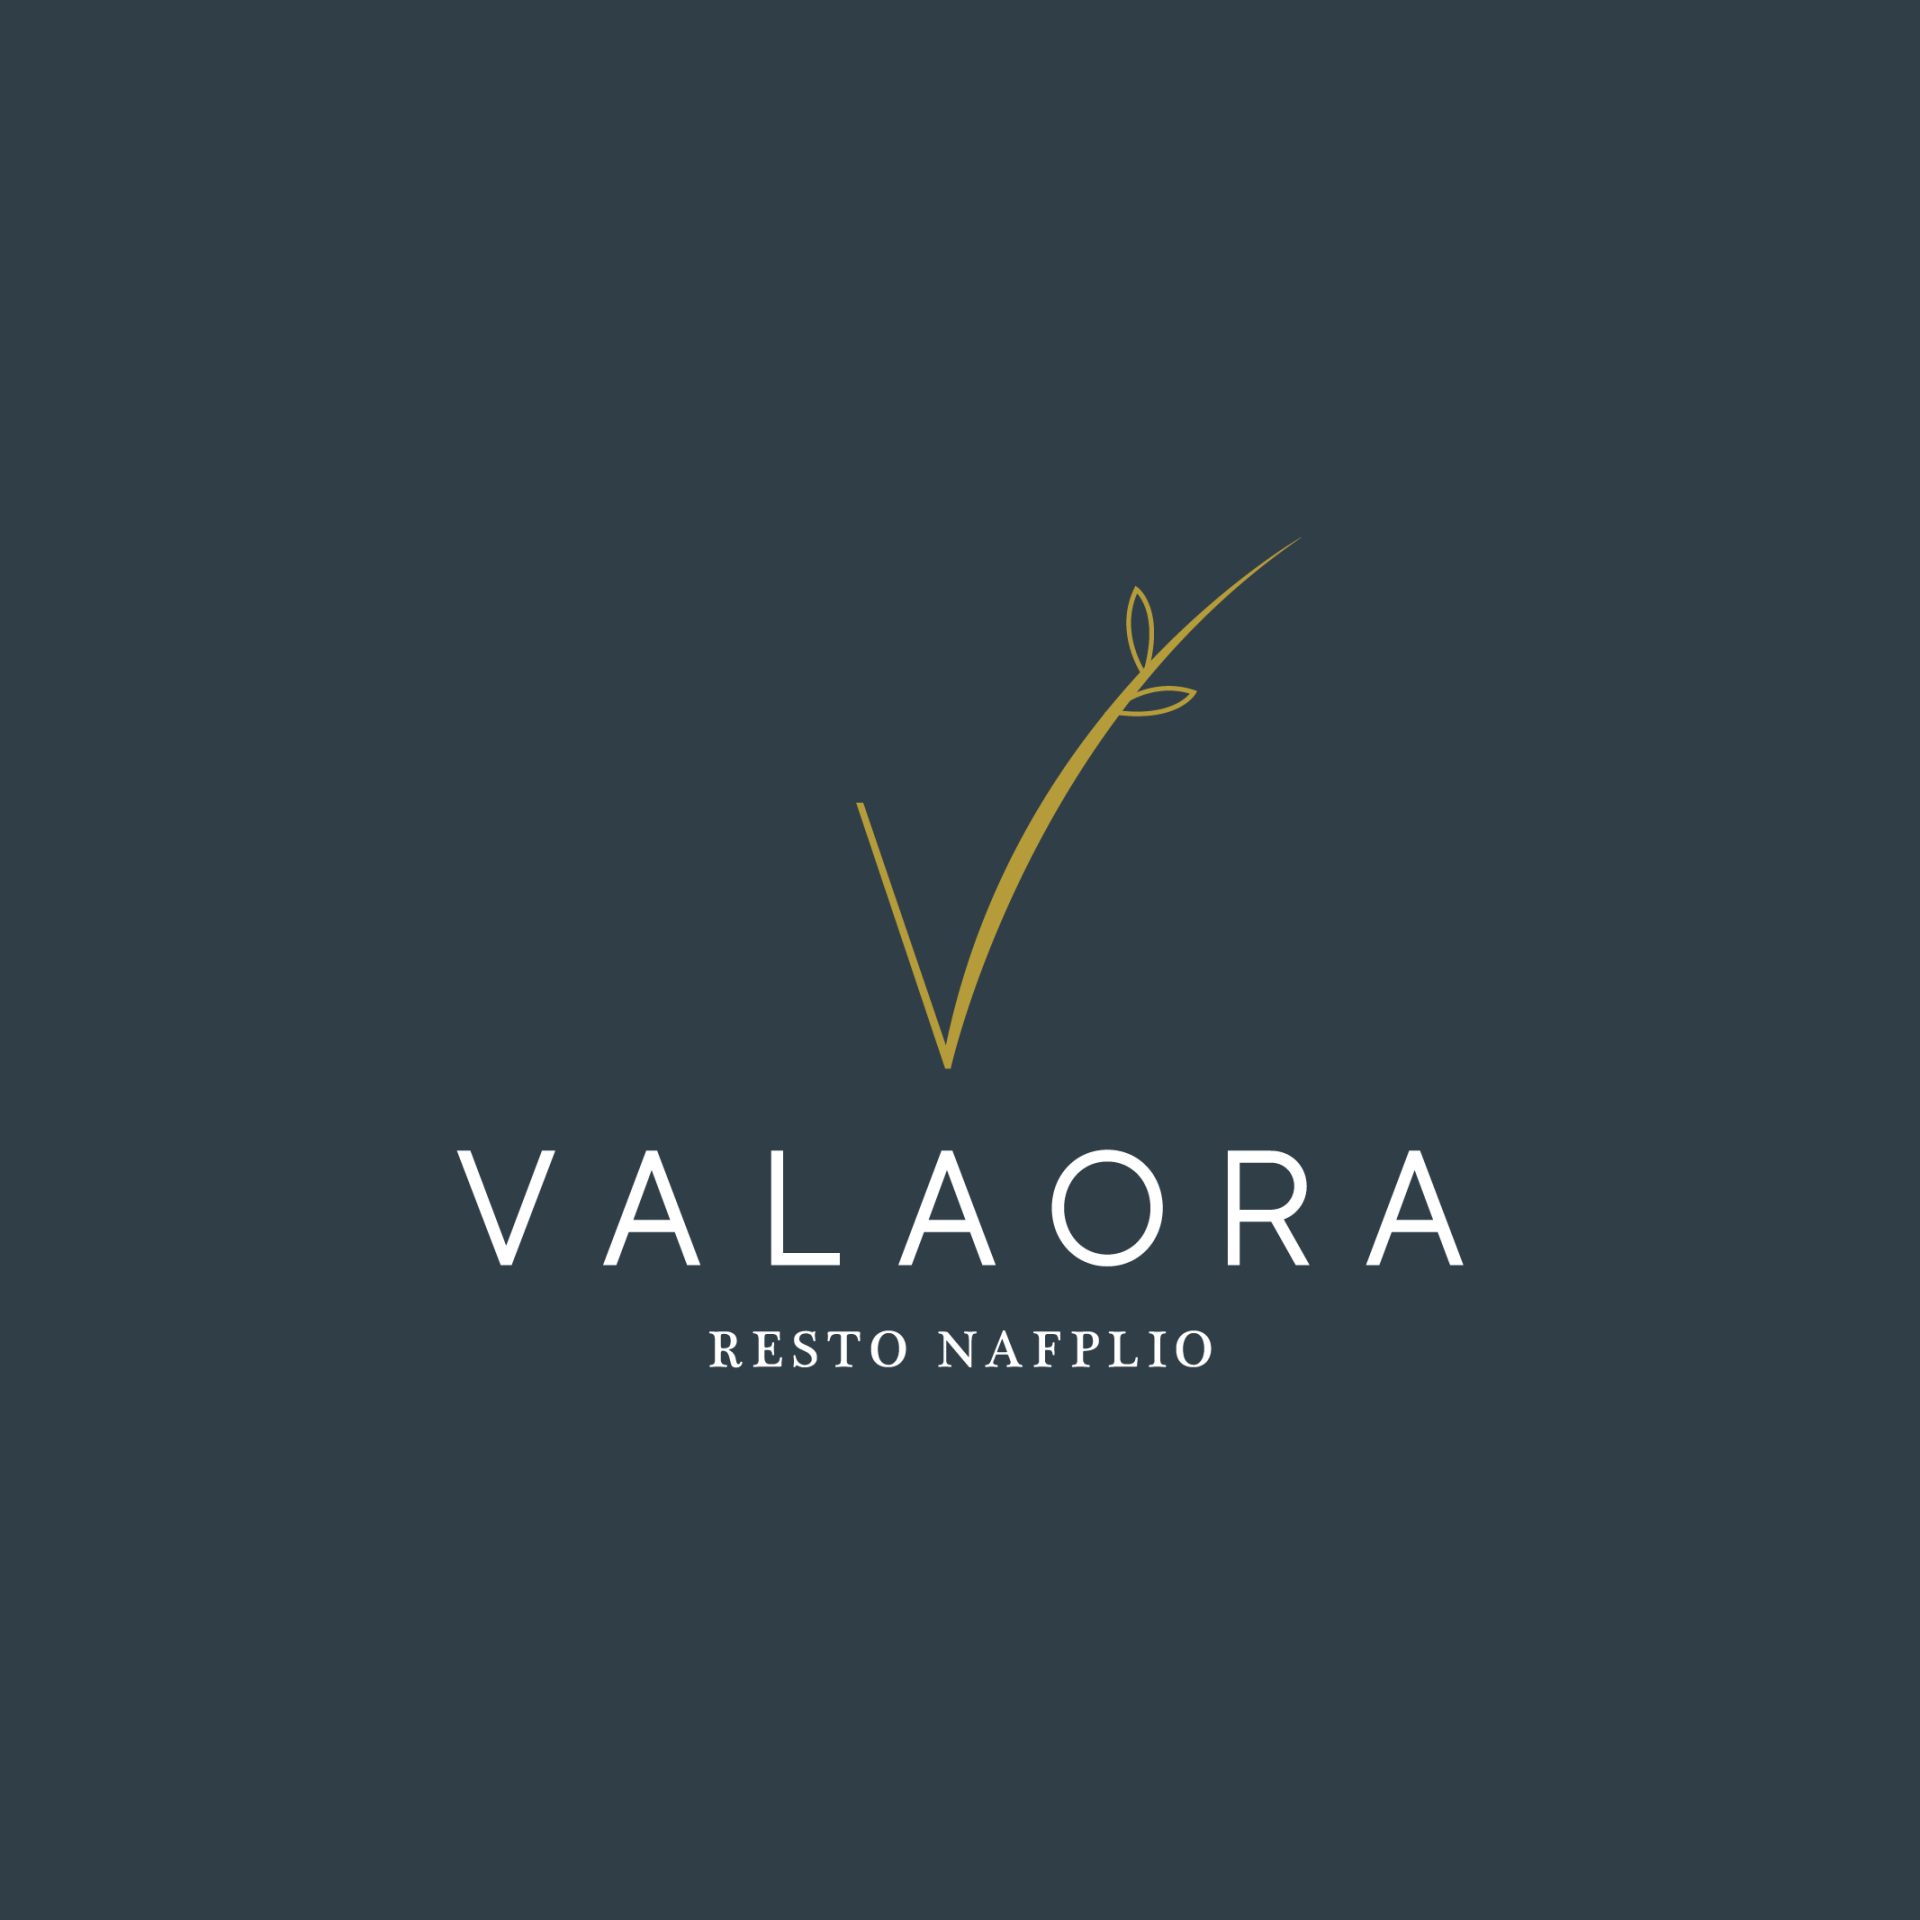 VALAORA RESTAURANT – VISUAL IDENTITY